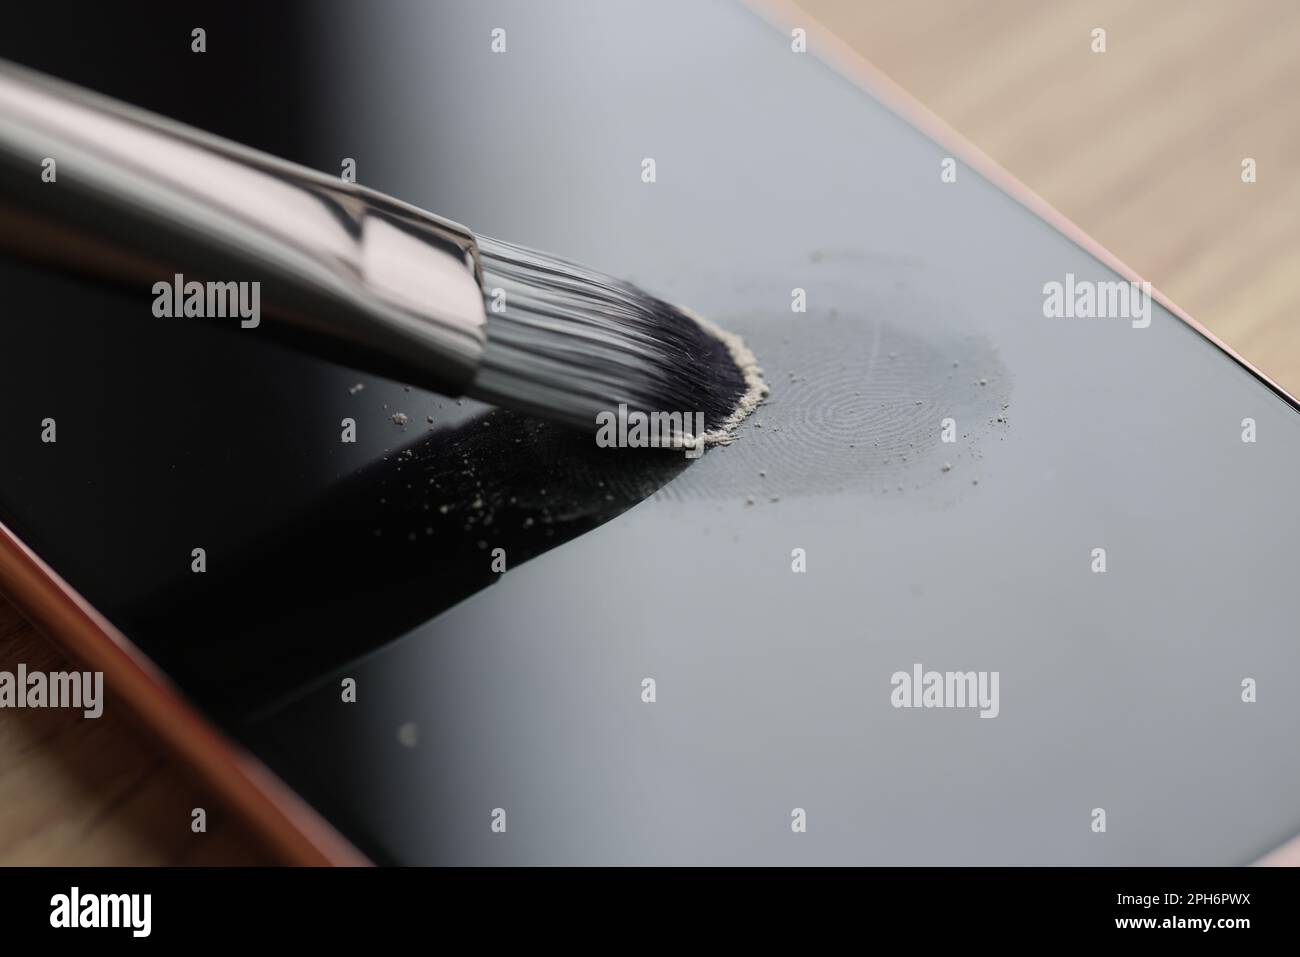 Brush processes fingerprints on screen of modern smartphone Stock Photo